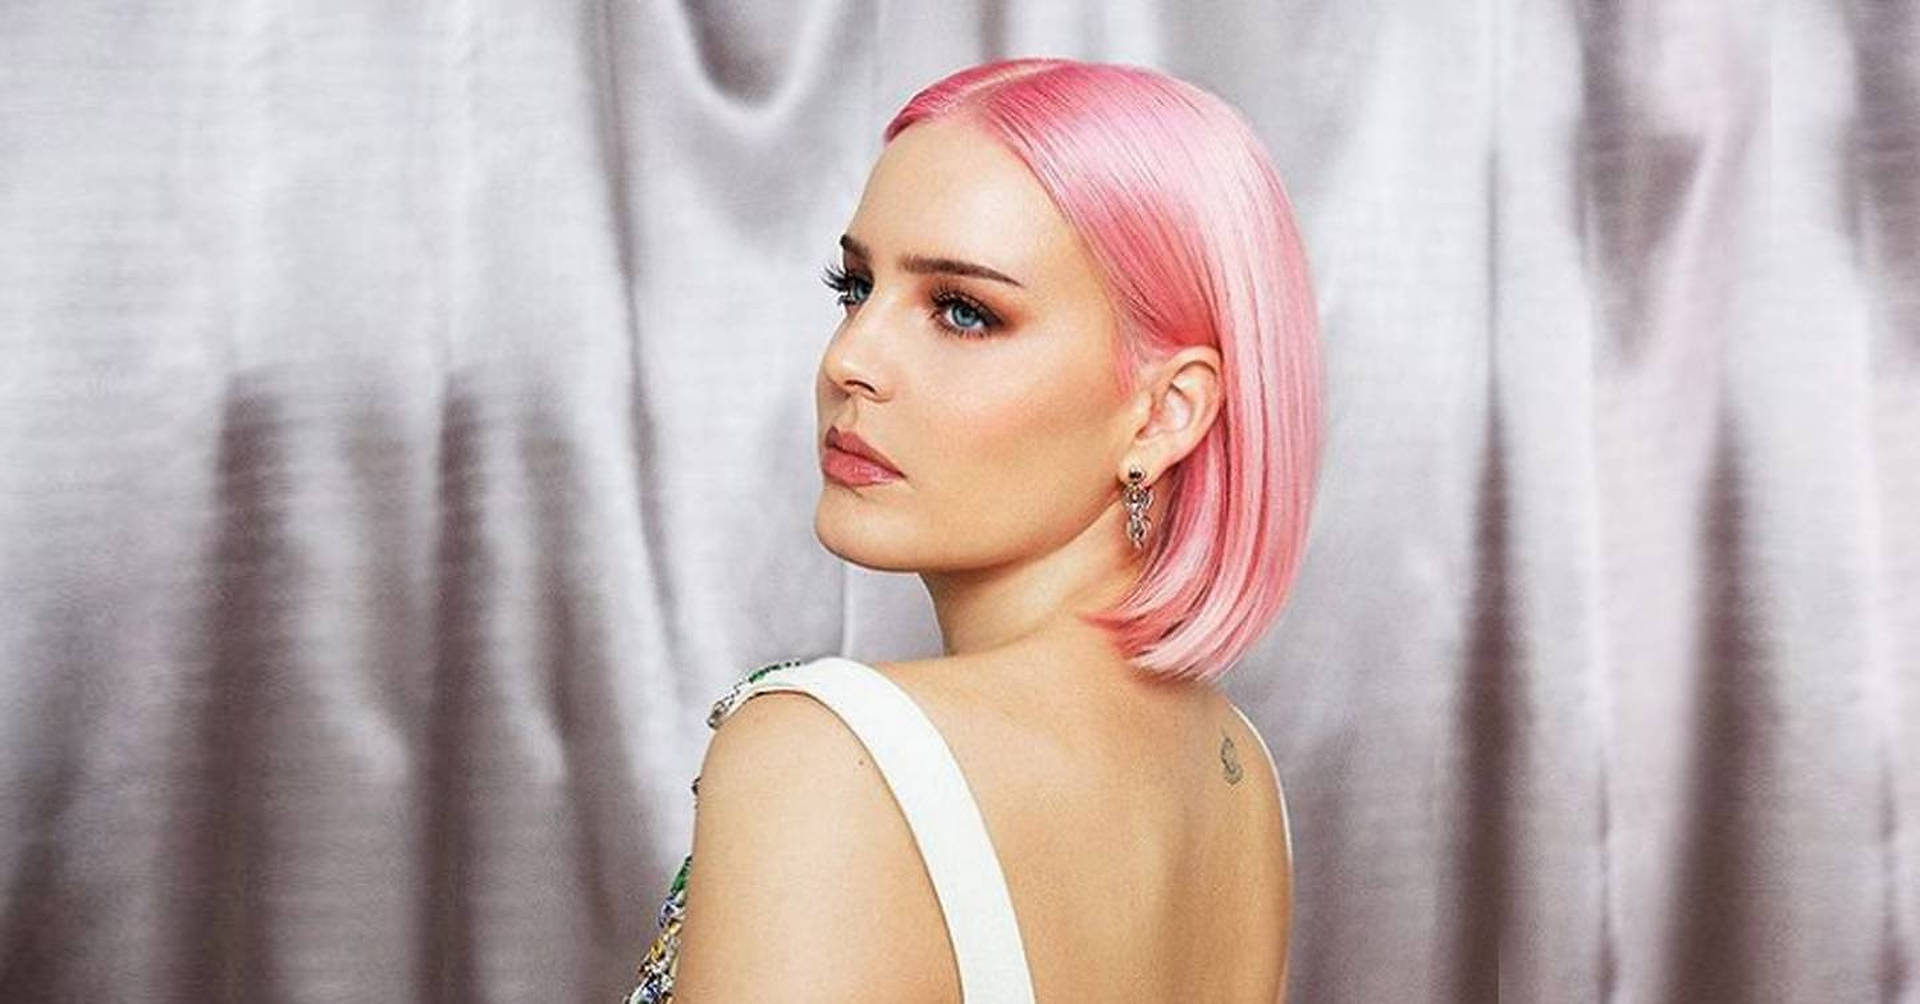 Anne-marie Pink Hair Background